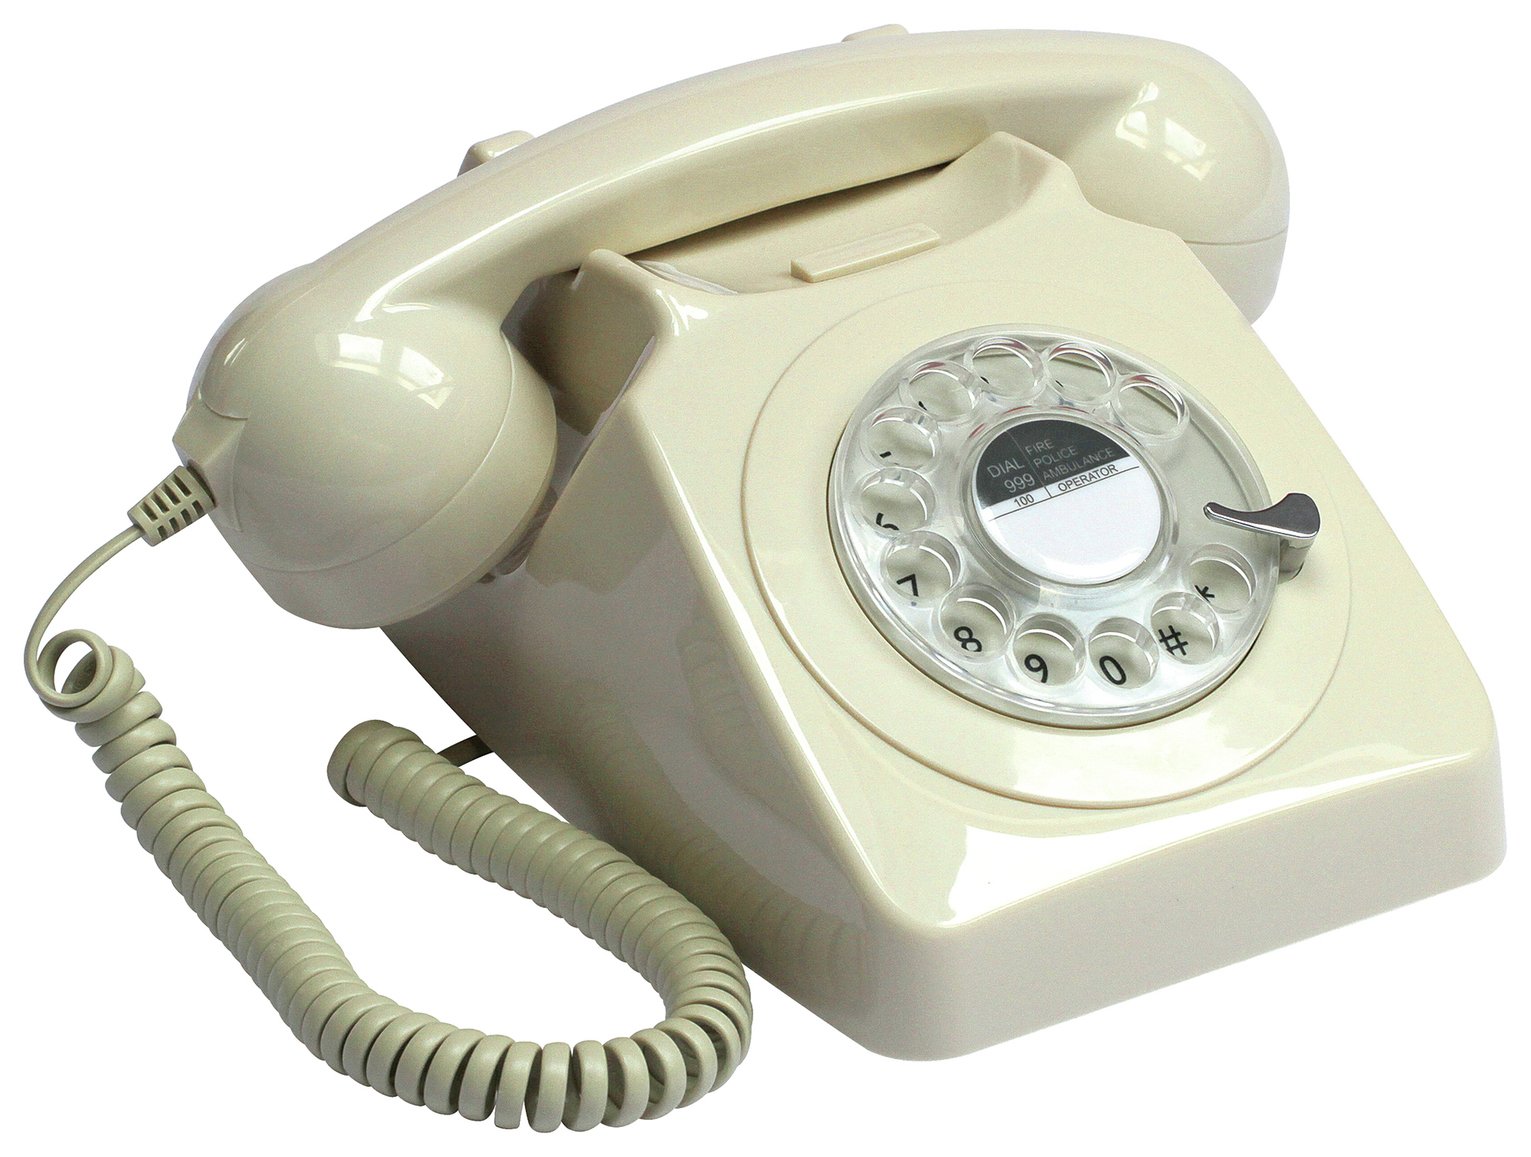 GPO 746 Rotary Dial Phone - Ivory